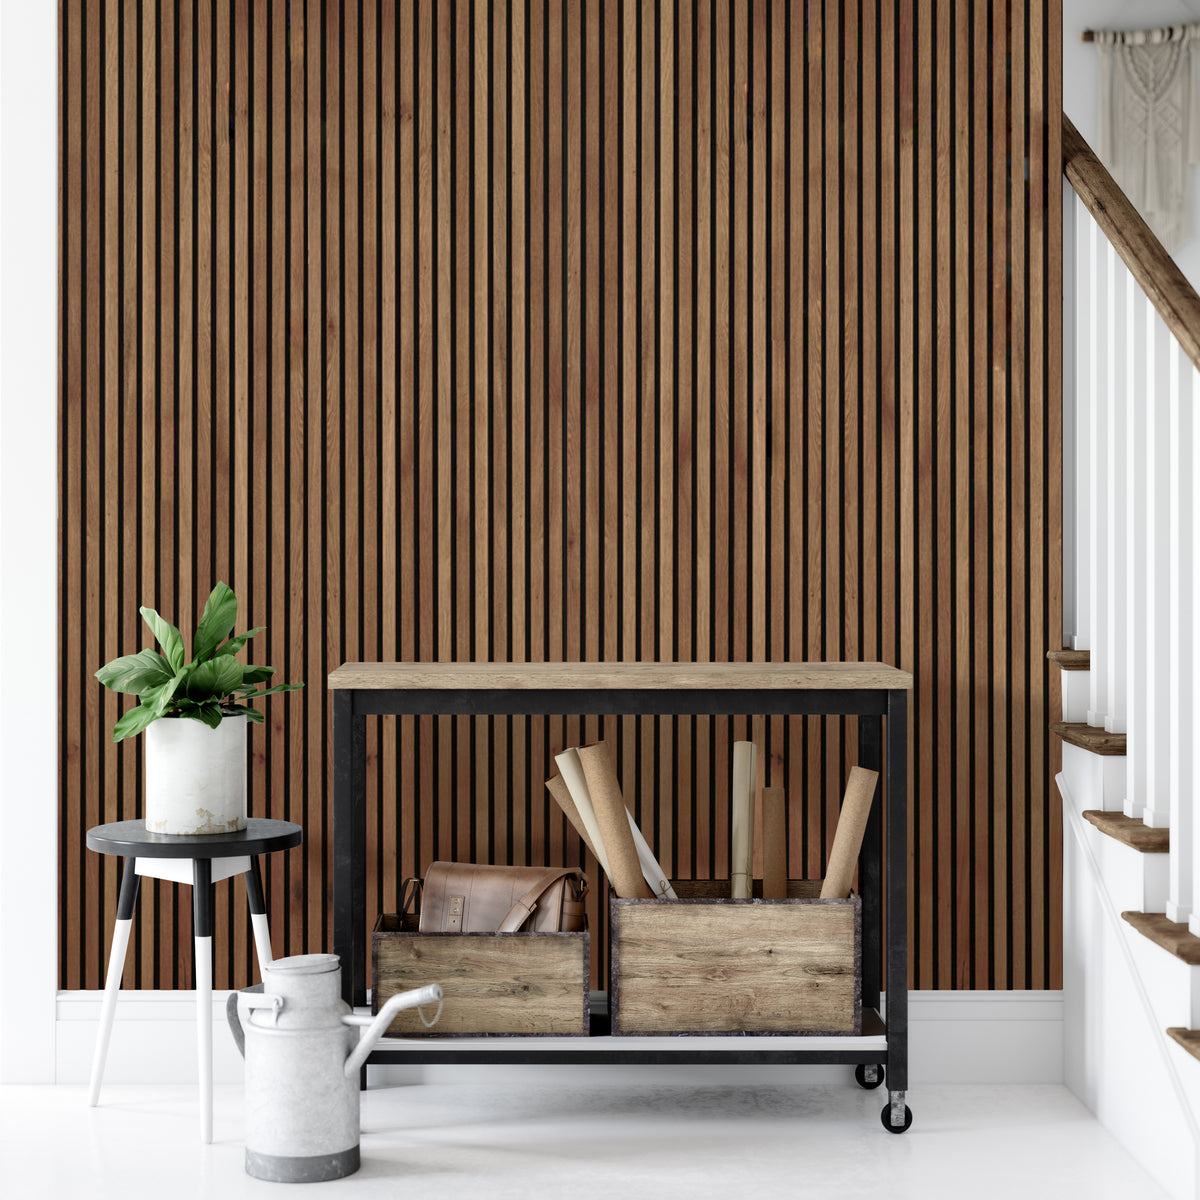 Acupanel Natural Bronze Acoustic Wood Panel Showcase 01 1200x1200 Crop Center ?v=1622042119